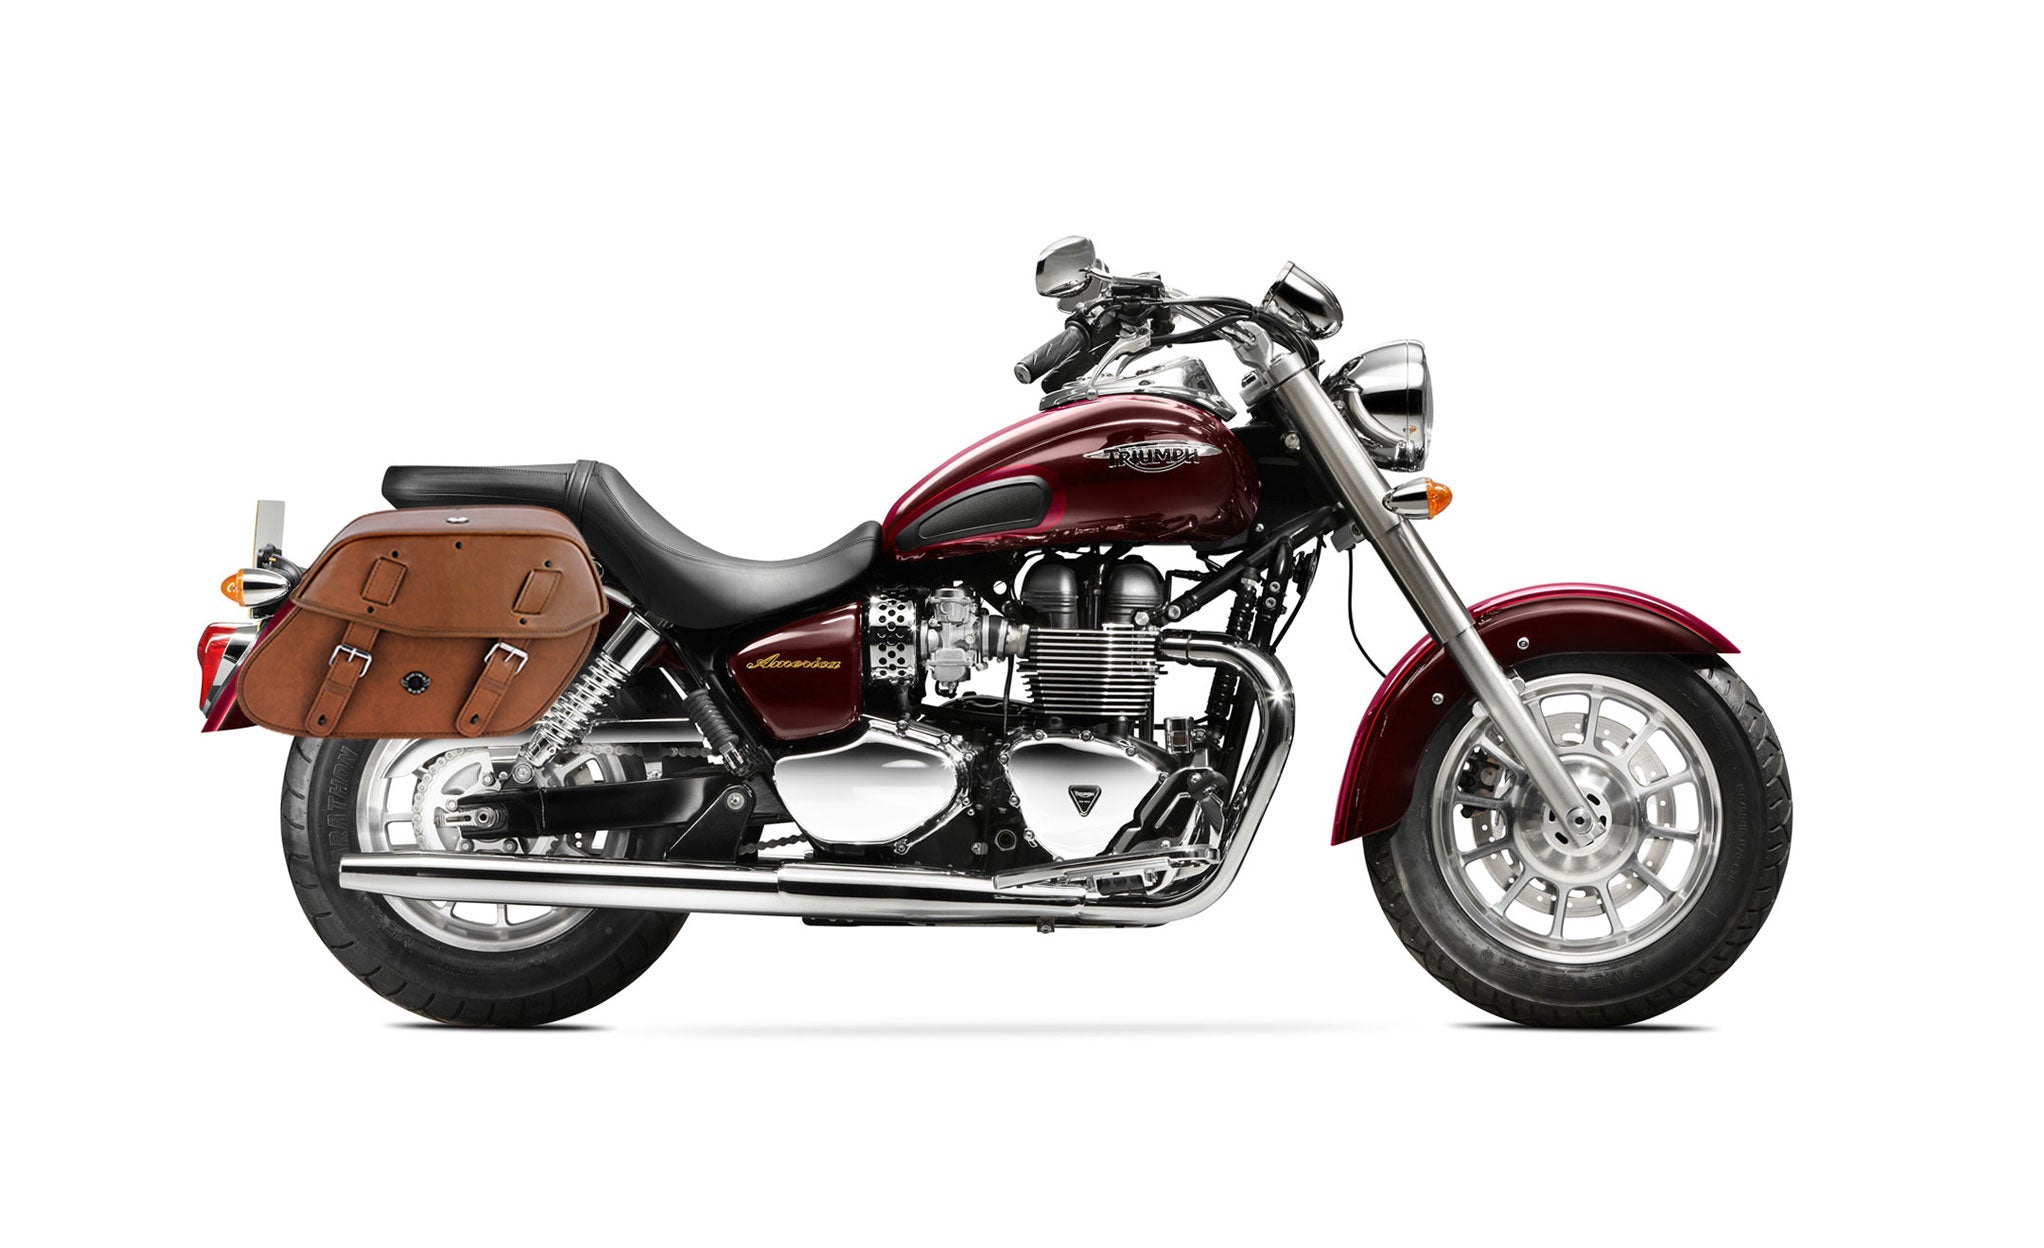 Viking Odin Brown Large Triumph America Leather Motorcycle Saddlebags on Bike Photo @expand